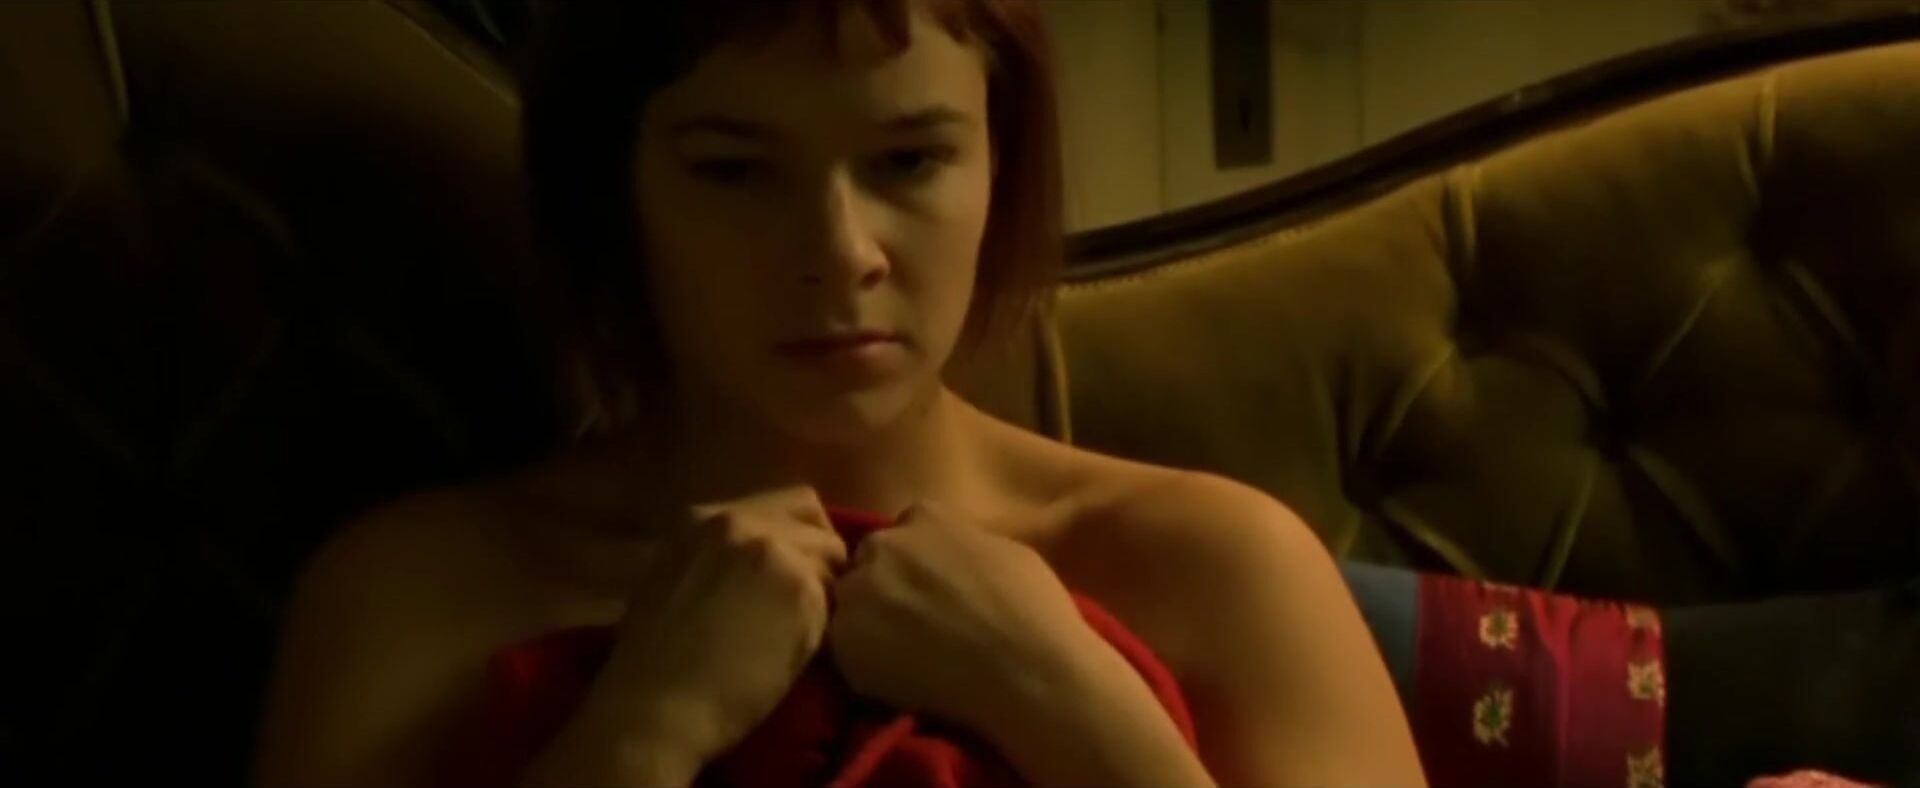 Gorda Swedish film Hannah Med H sex scene where man thrusts cock into Tove Edfeldt nude (2003) TBLOP - 1